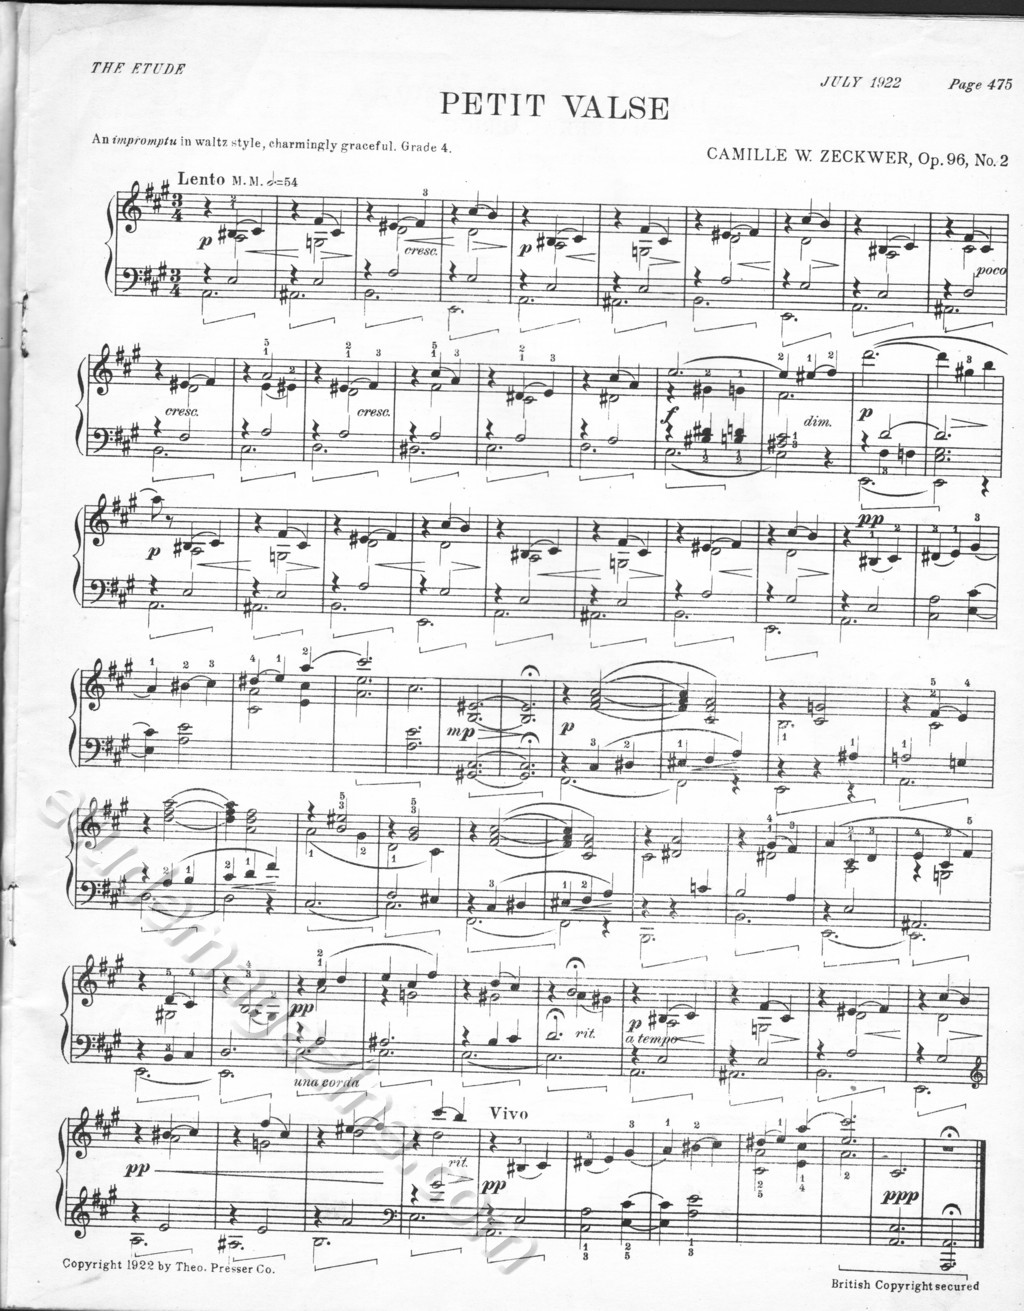 Petit Valse. Camille W. Zeckwer, Op. 96, No. 2